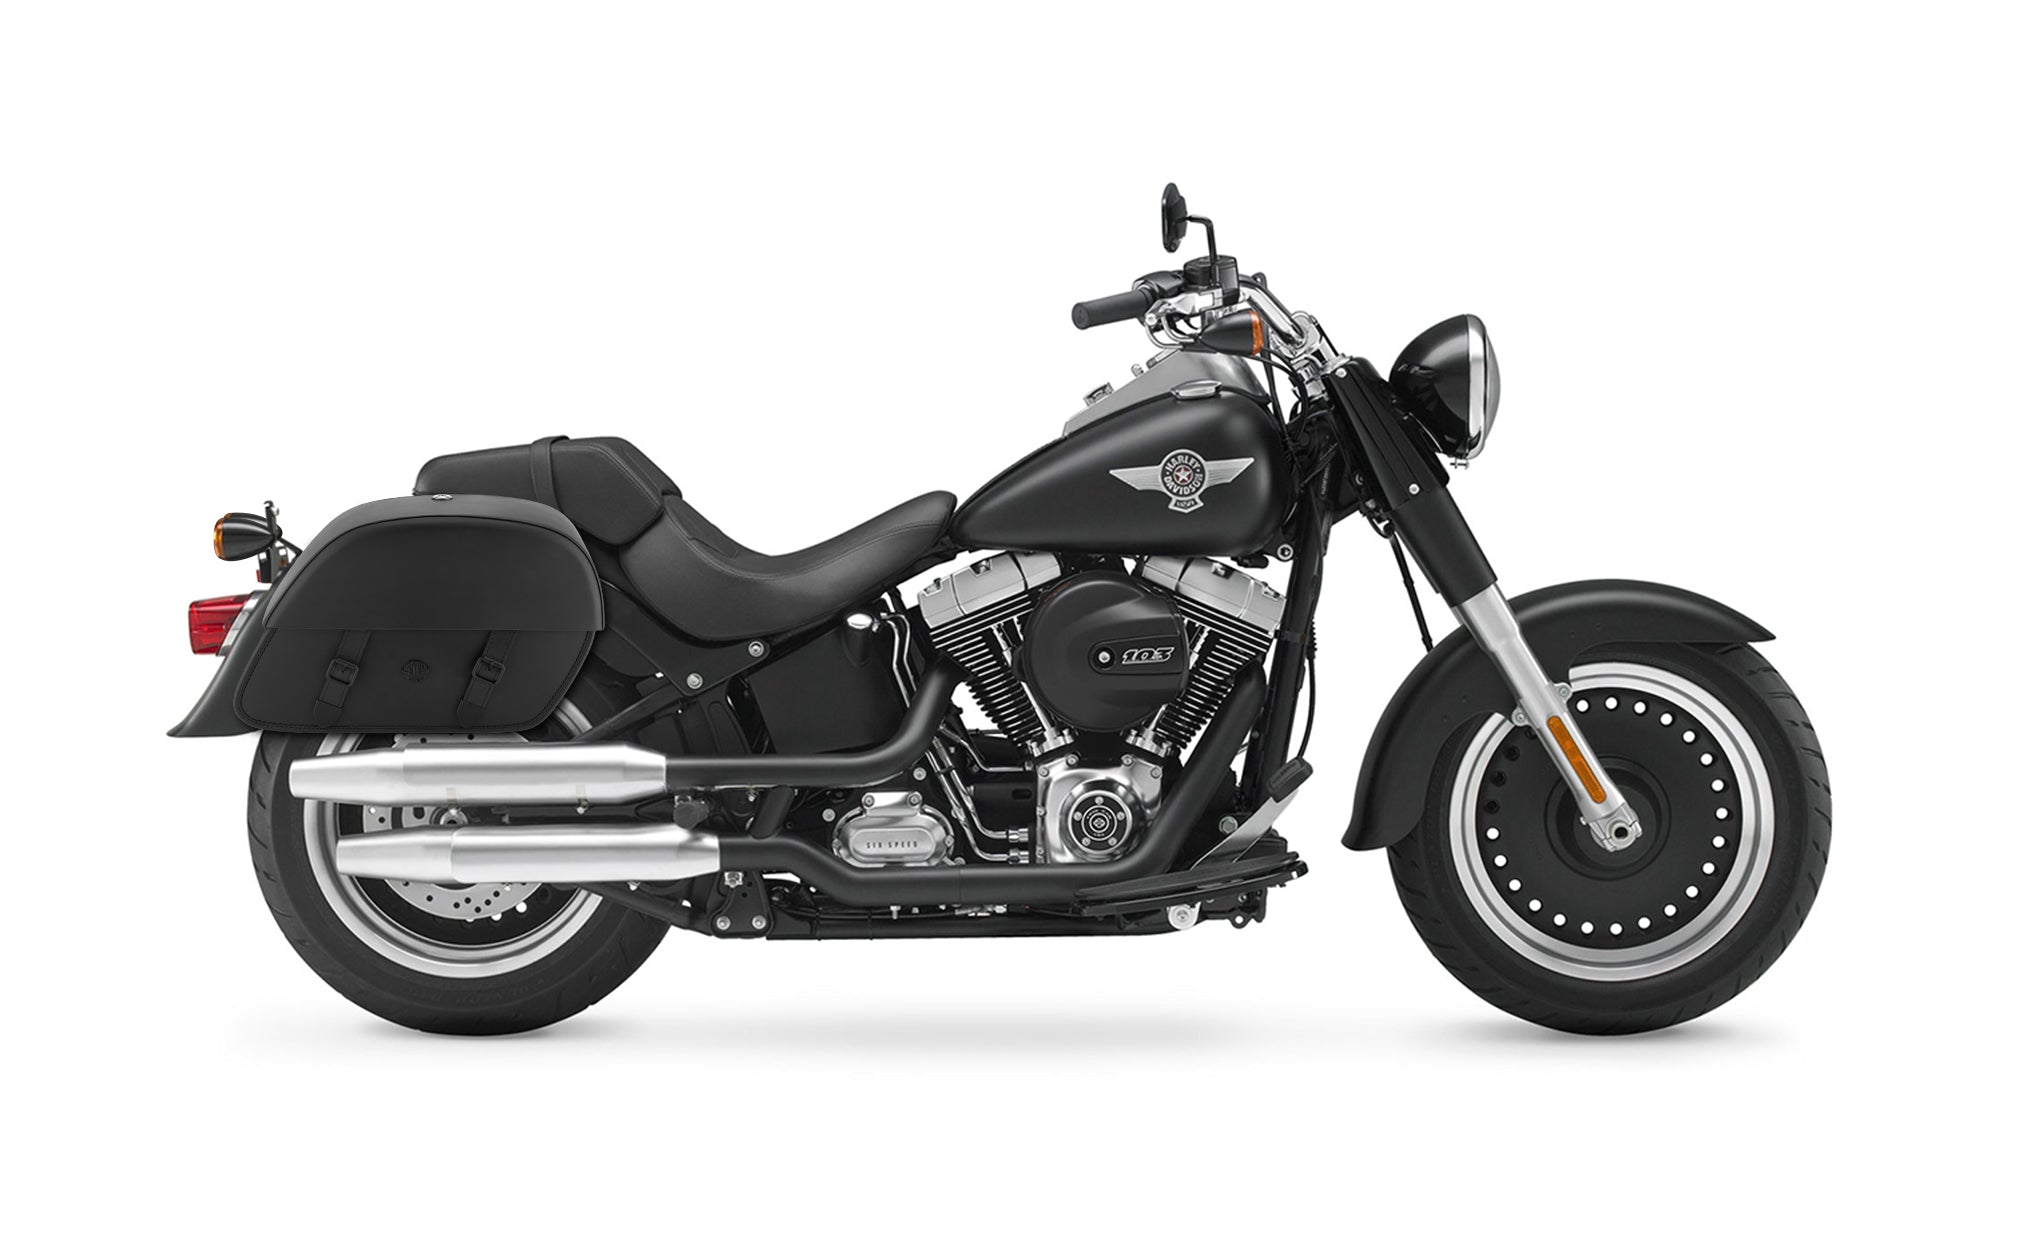 28L - Baelor Medium Motorcycle Saddlebags for Harley Softail Fat Boy Lo FLSTFB @expand